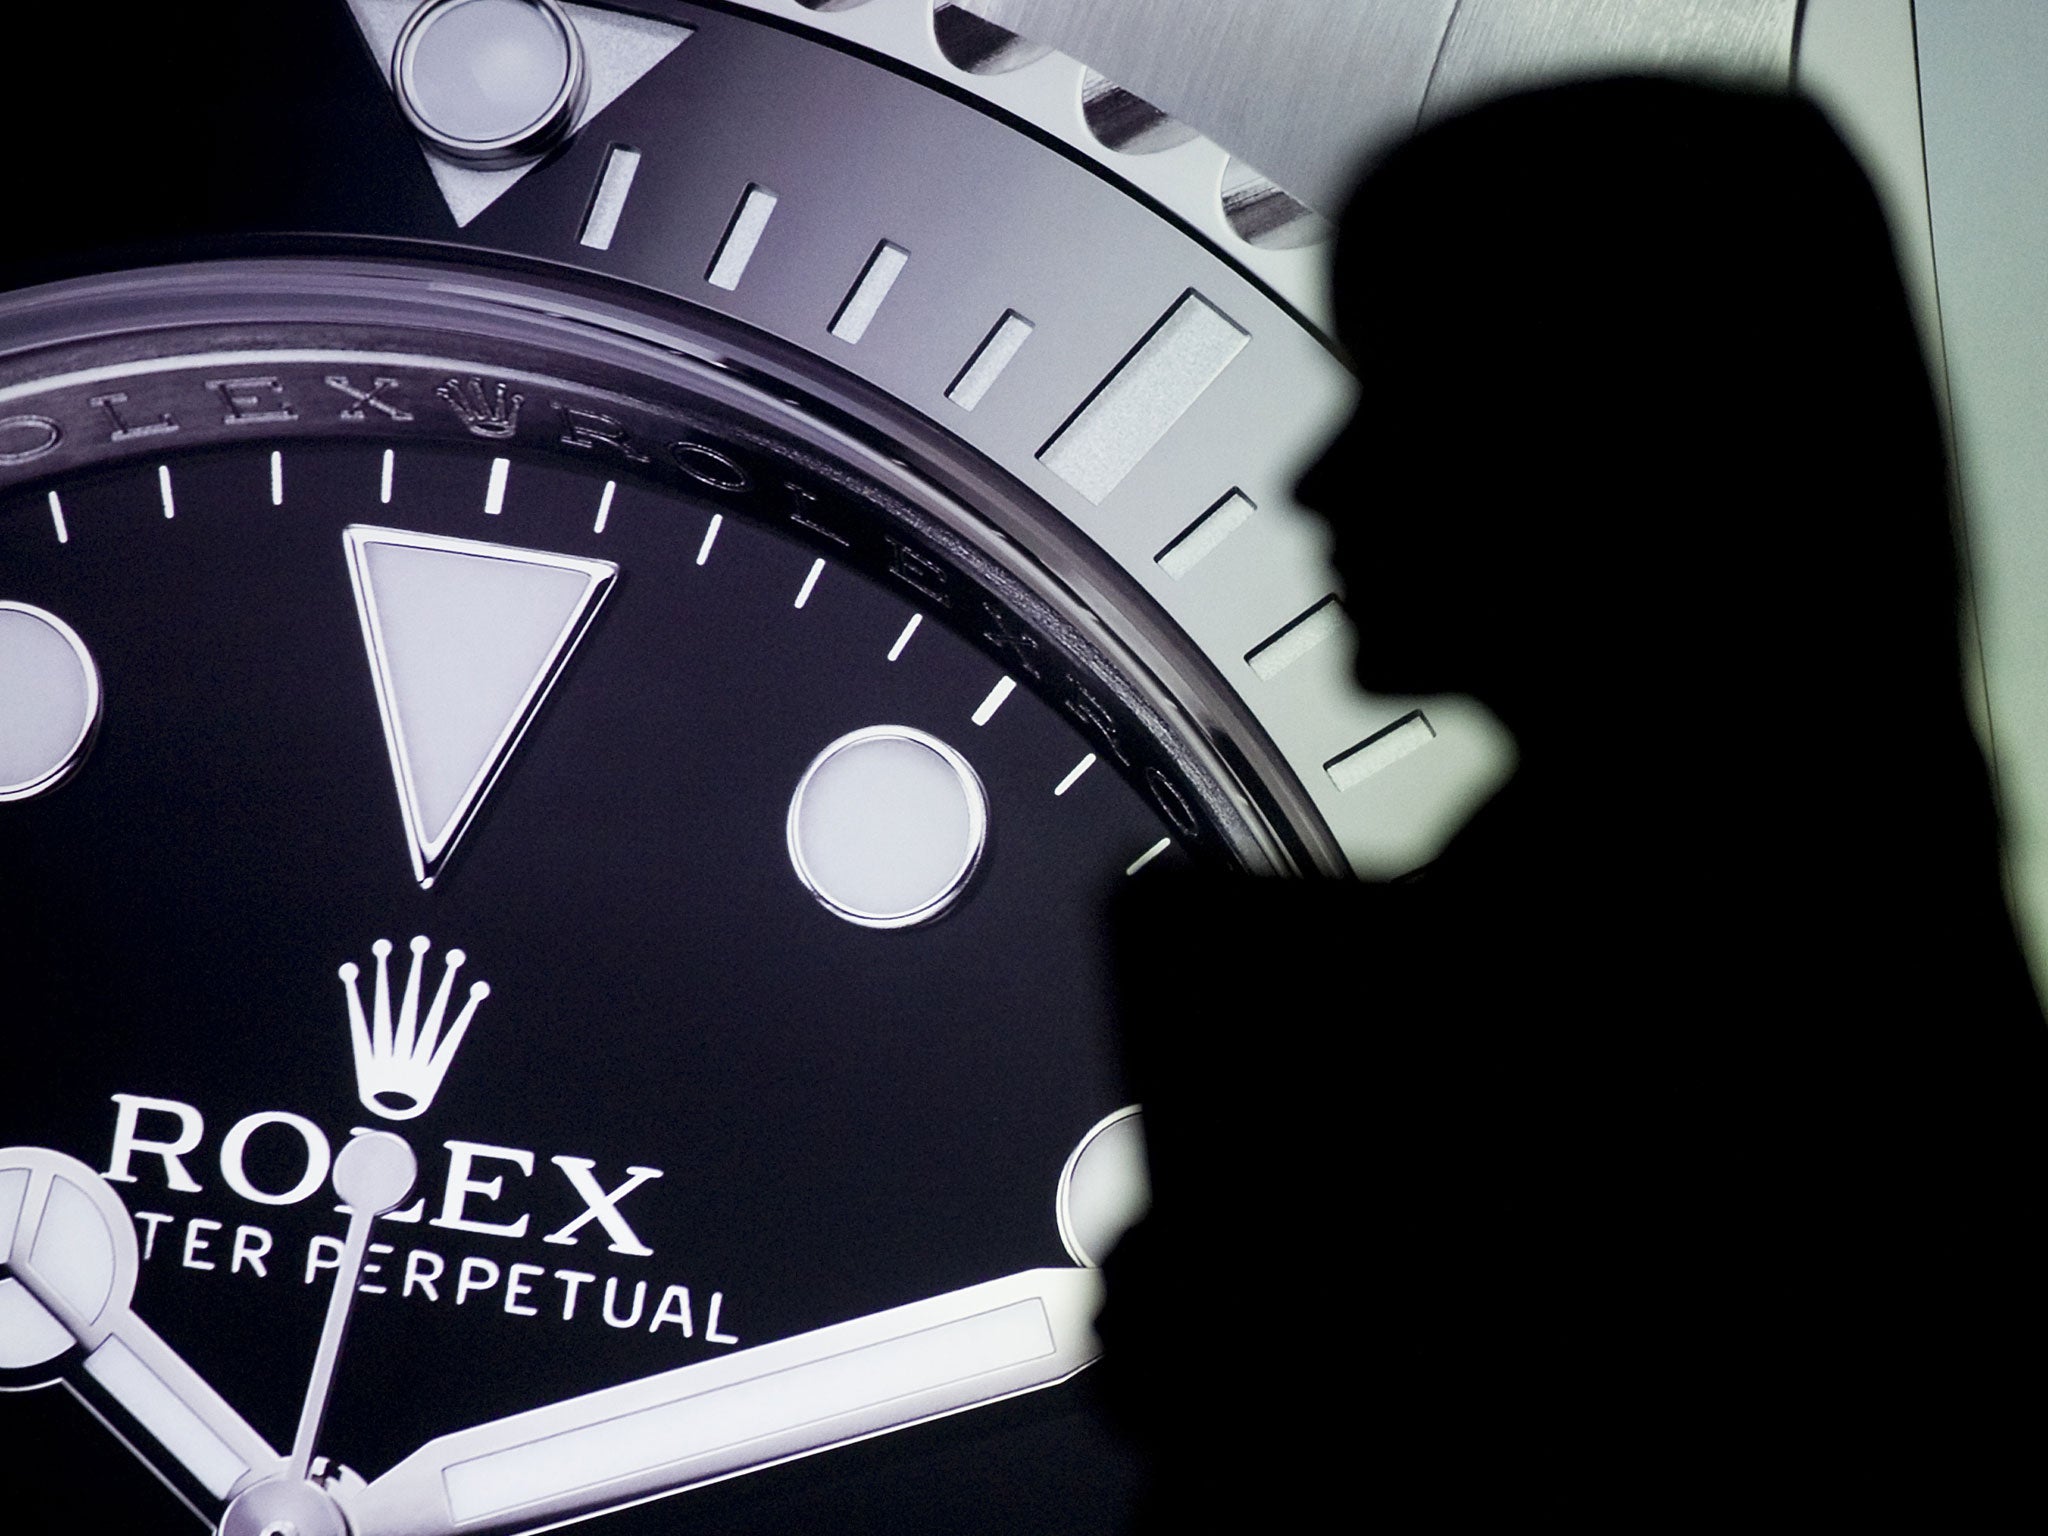 Rolex is demanding that a children’s clock business rebrands